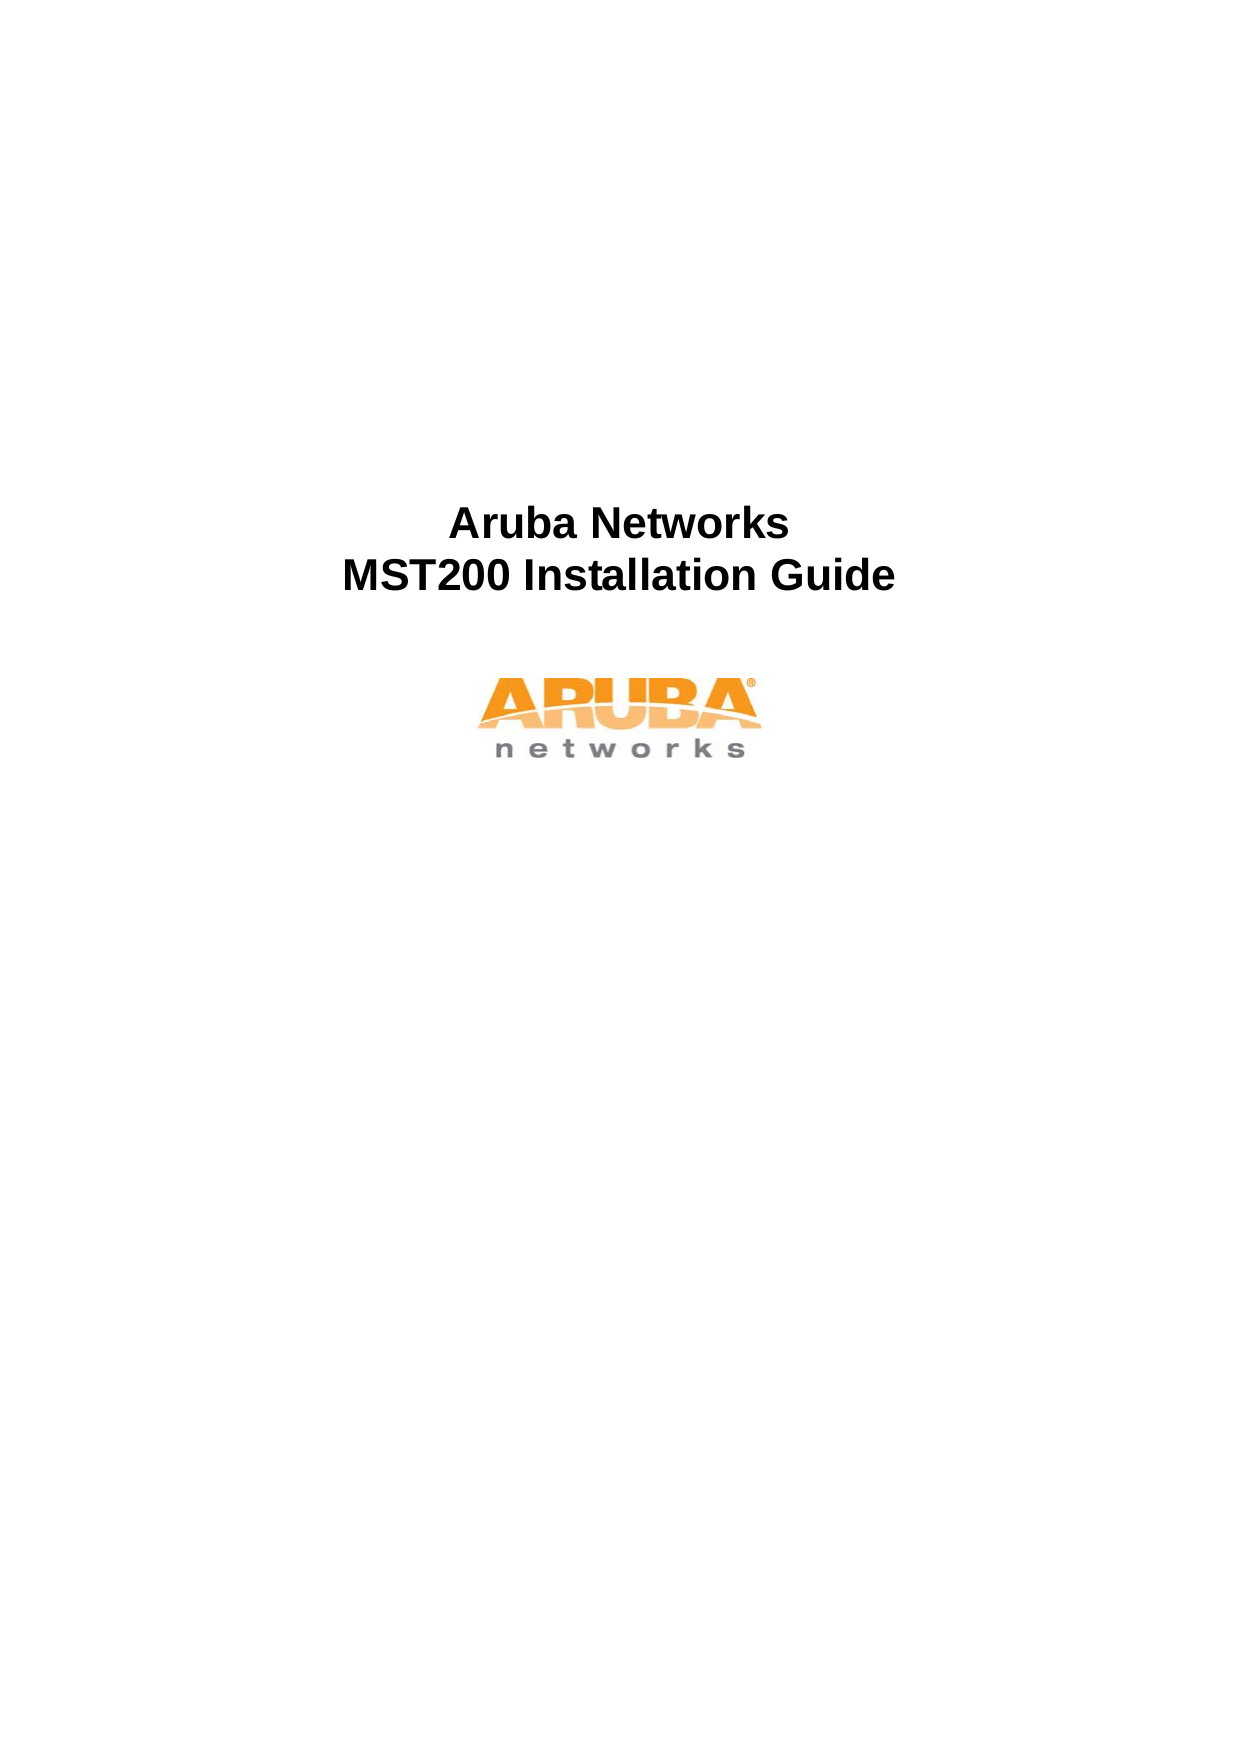     Aruba Networks MST200 Installation Guide        